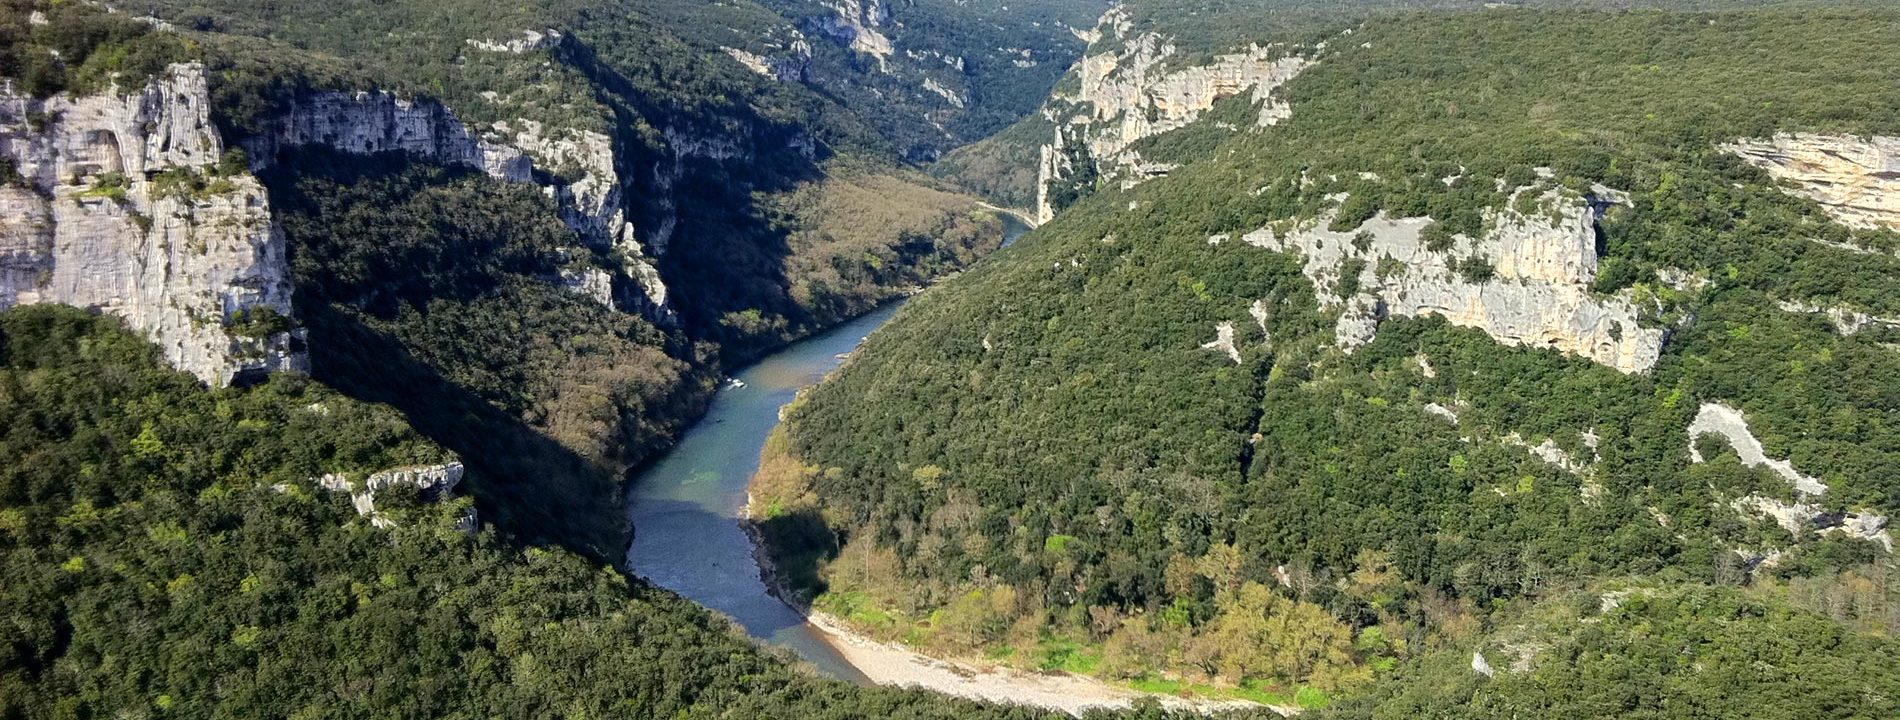 Kanu - Kajak von Chames nach St Martin d'Ardèche - 24 km / 1 Tag met Rivière et Nature